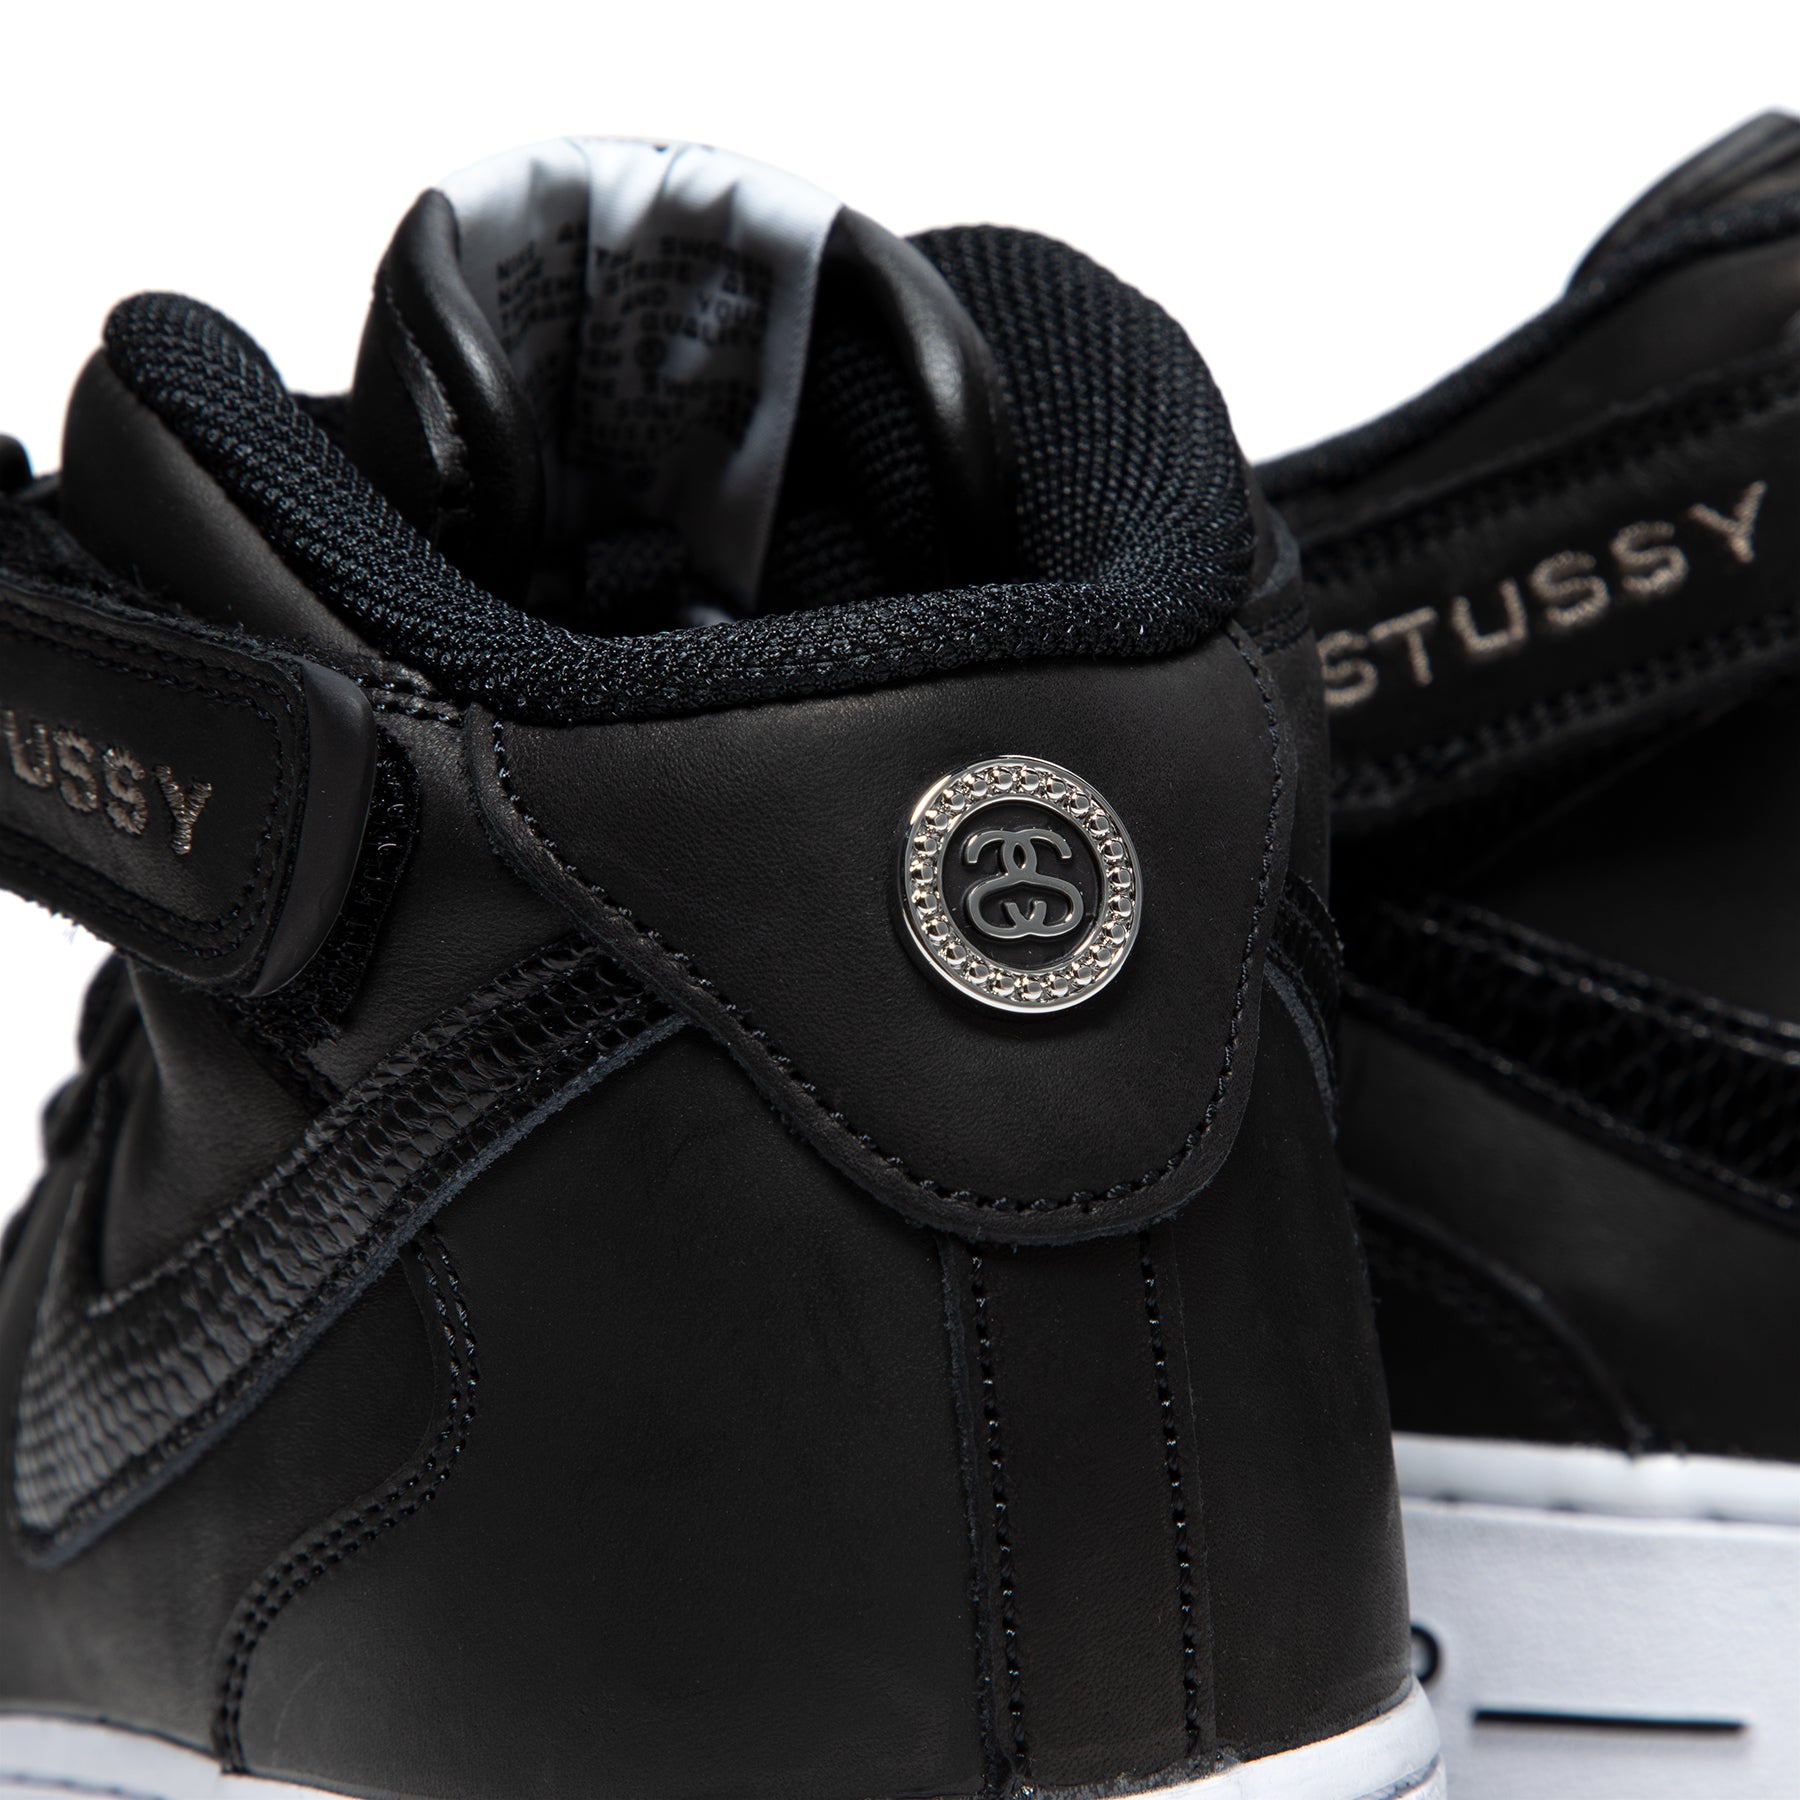 Stussy x Nike Air Force 1 Mid Black - Size 9 Men